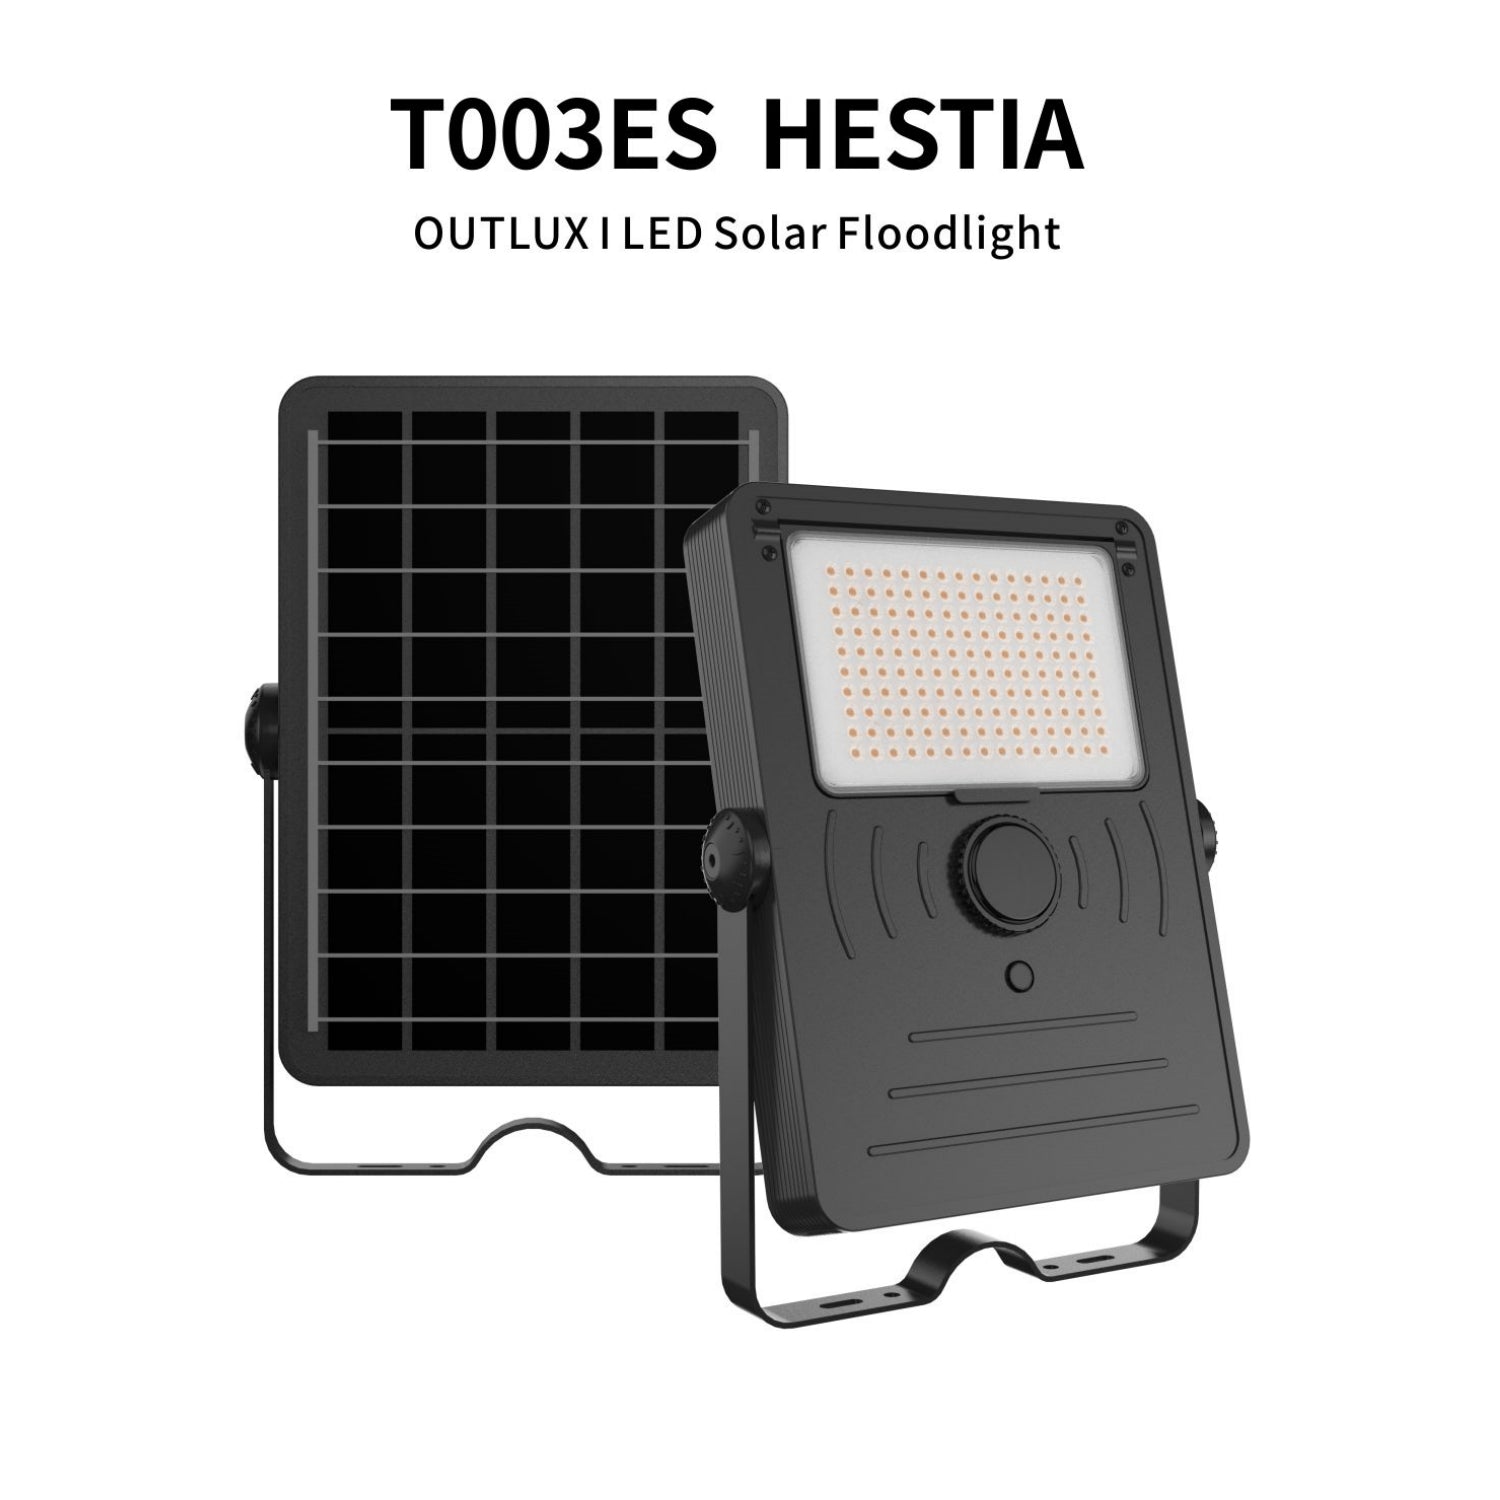 Outlux Solar Floodlight- 100W T003ES Hestia